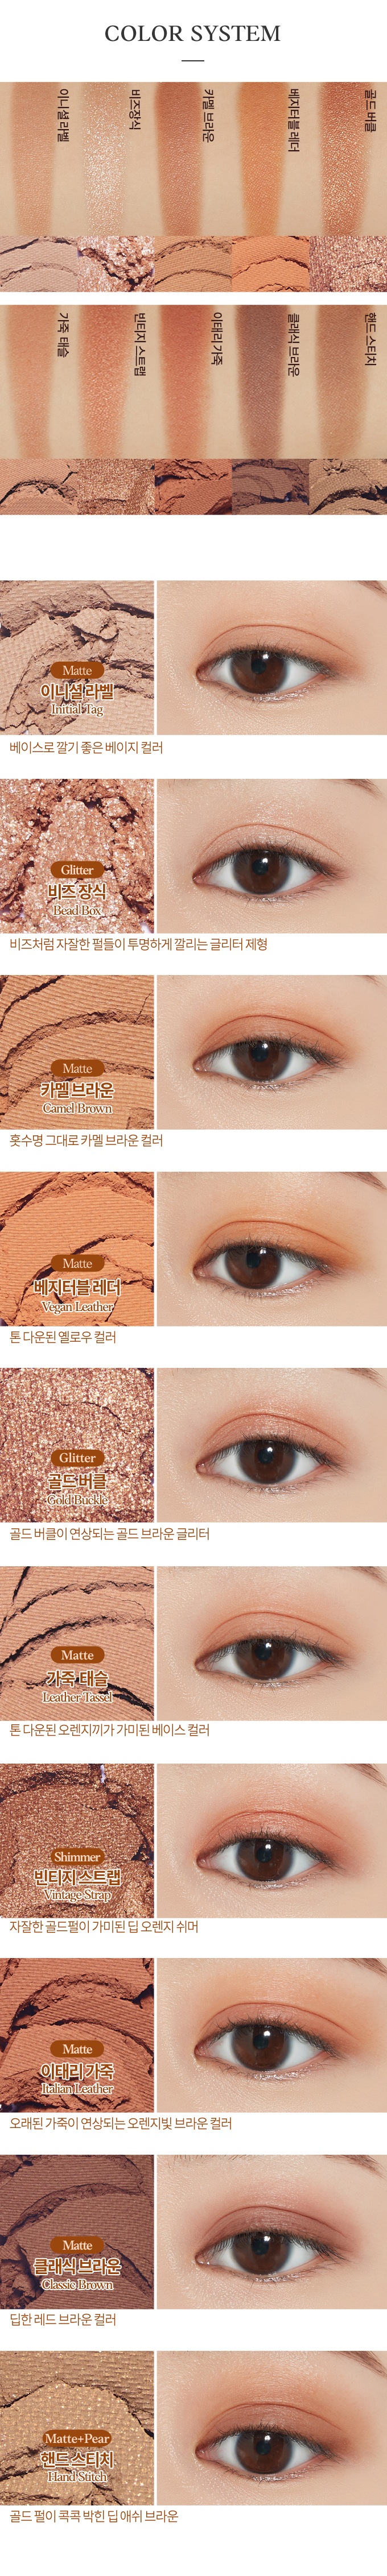 Etude House Play Color Eyes Mini Leather Shop korean cosmetic makeup product online shop malaysia macau thailand2